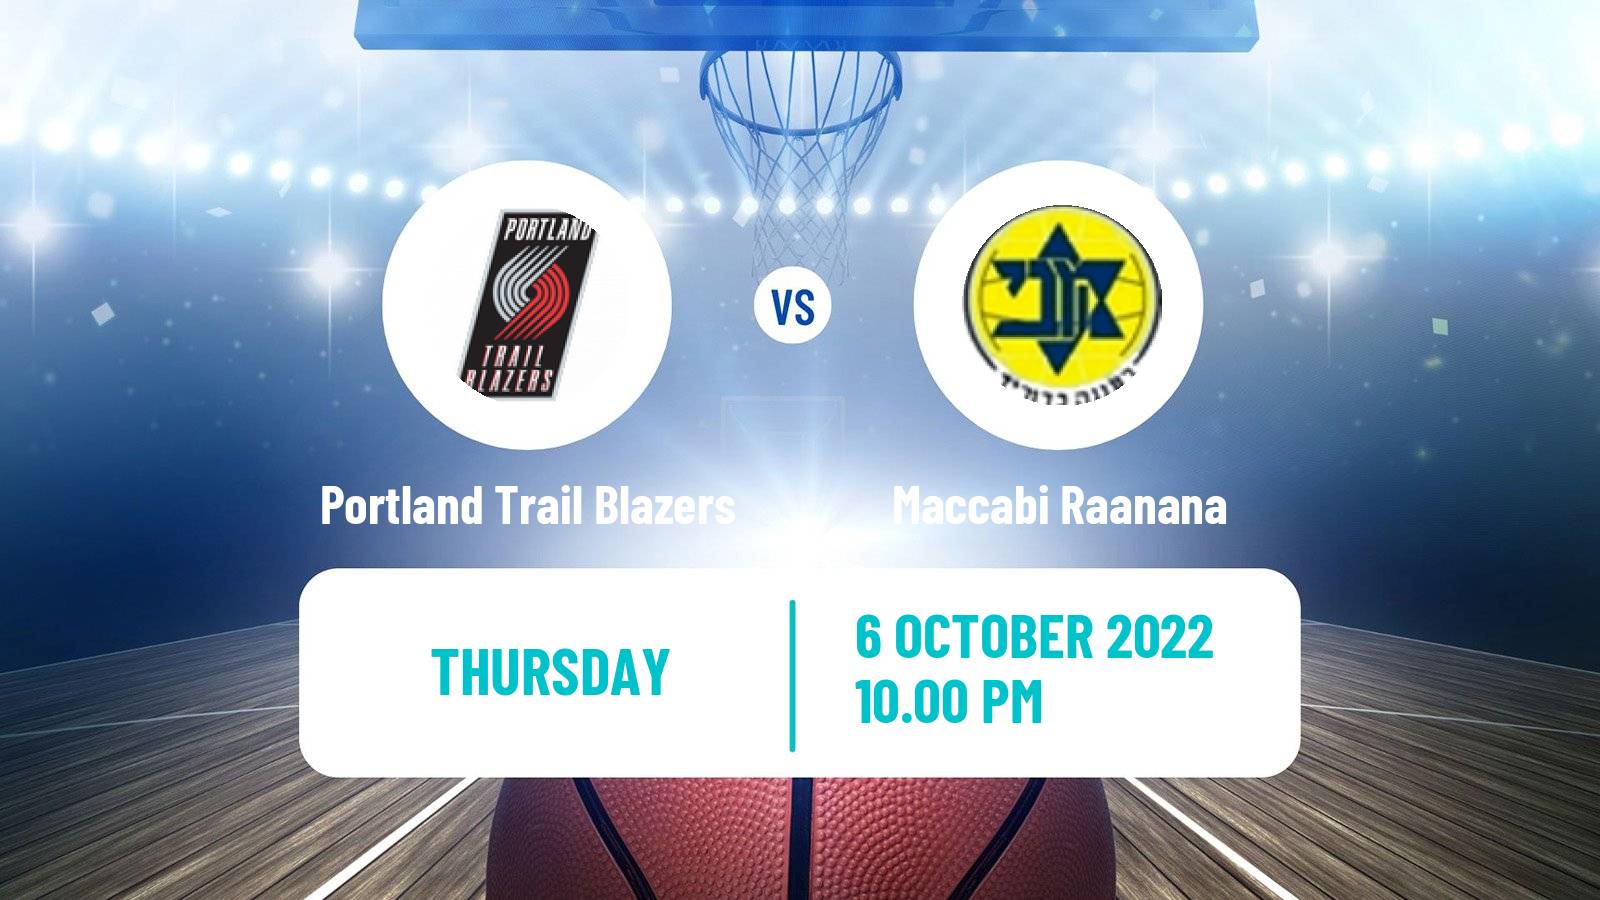 Basketball Club Friendly Basketball Portland Trail Blazers - Maccabi Raanana